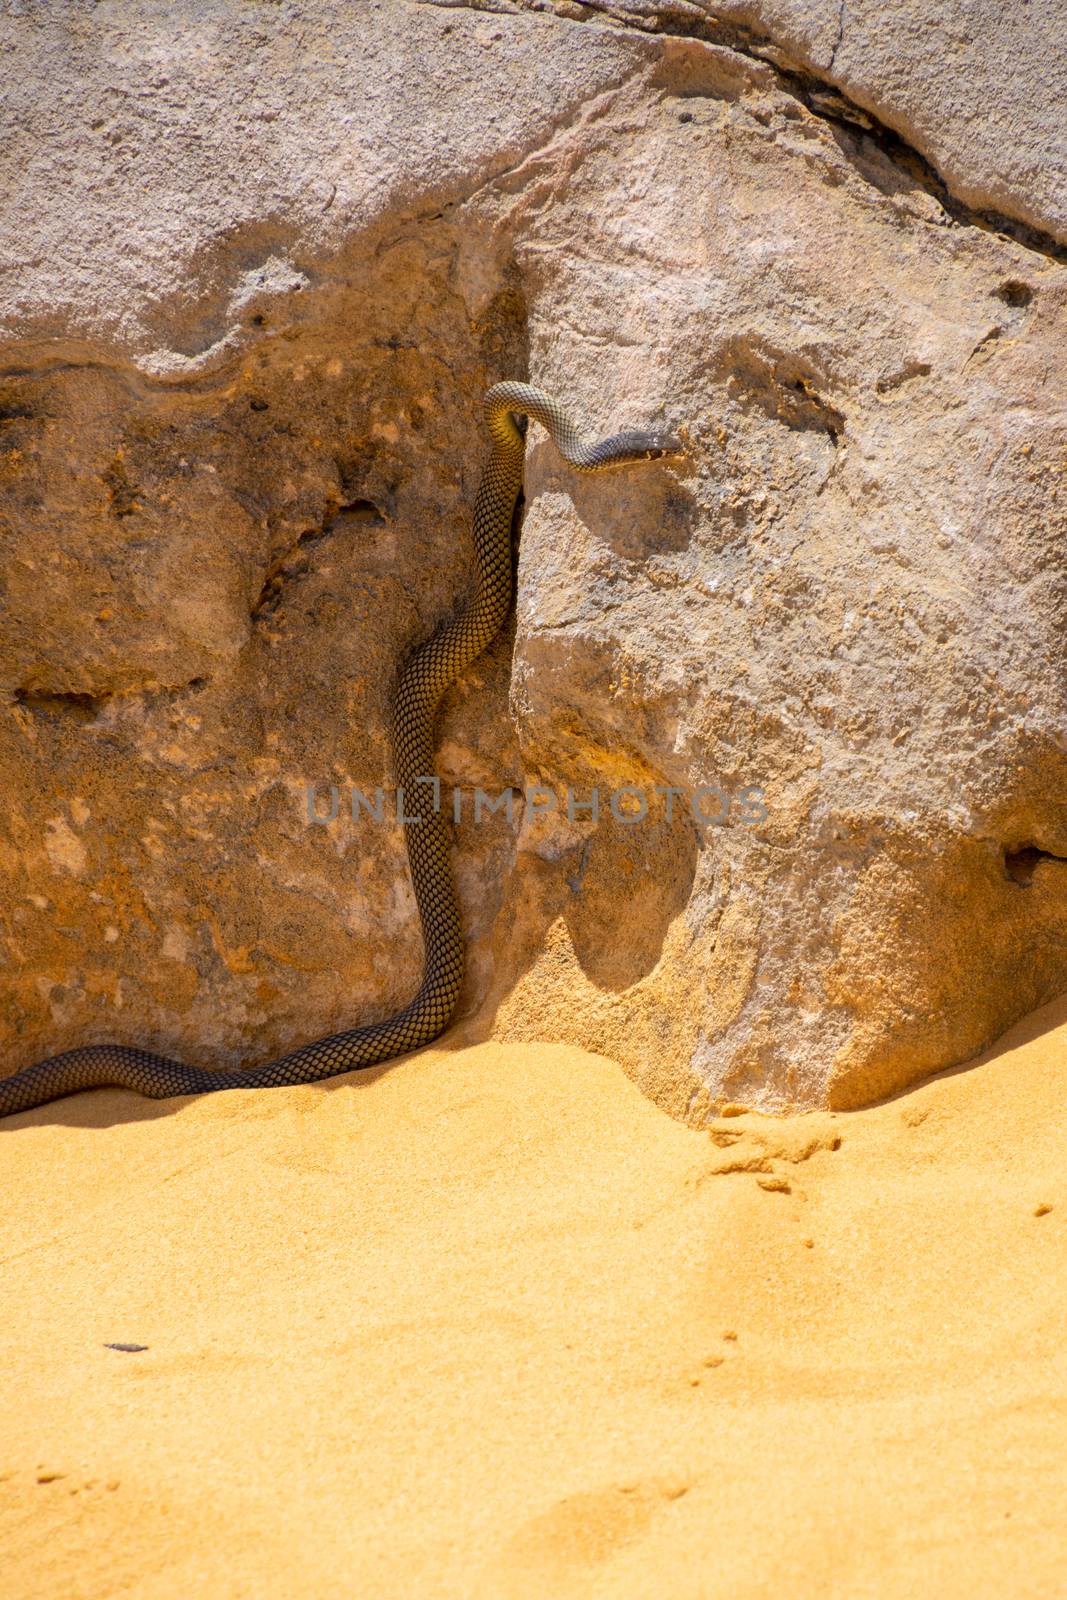 Sand snake at the pinnacles desert in Western Australia in the hot sun